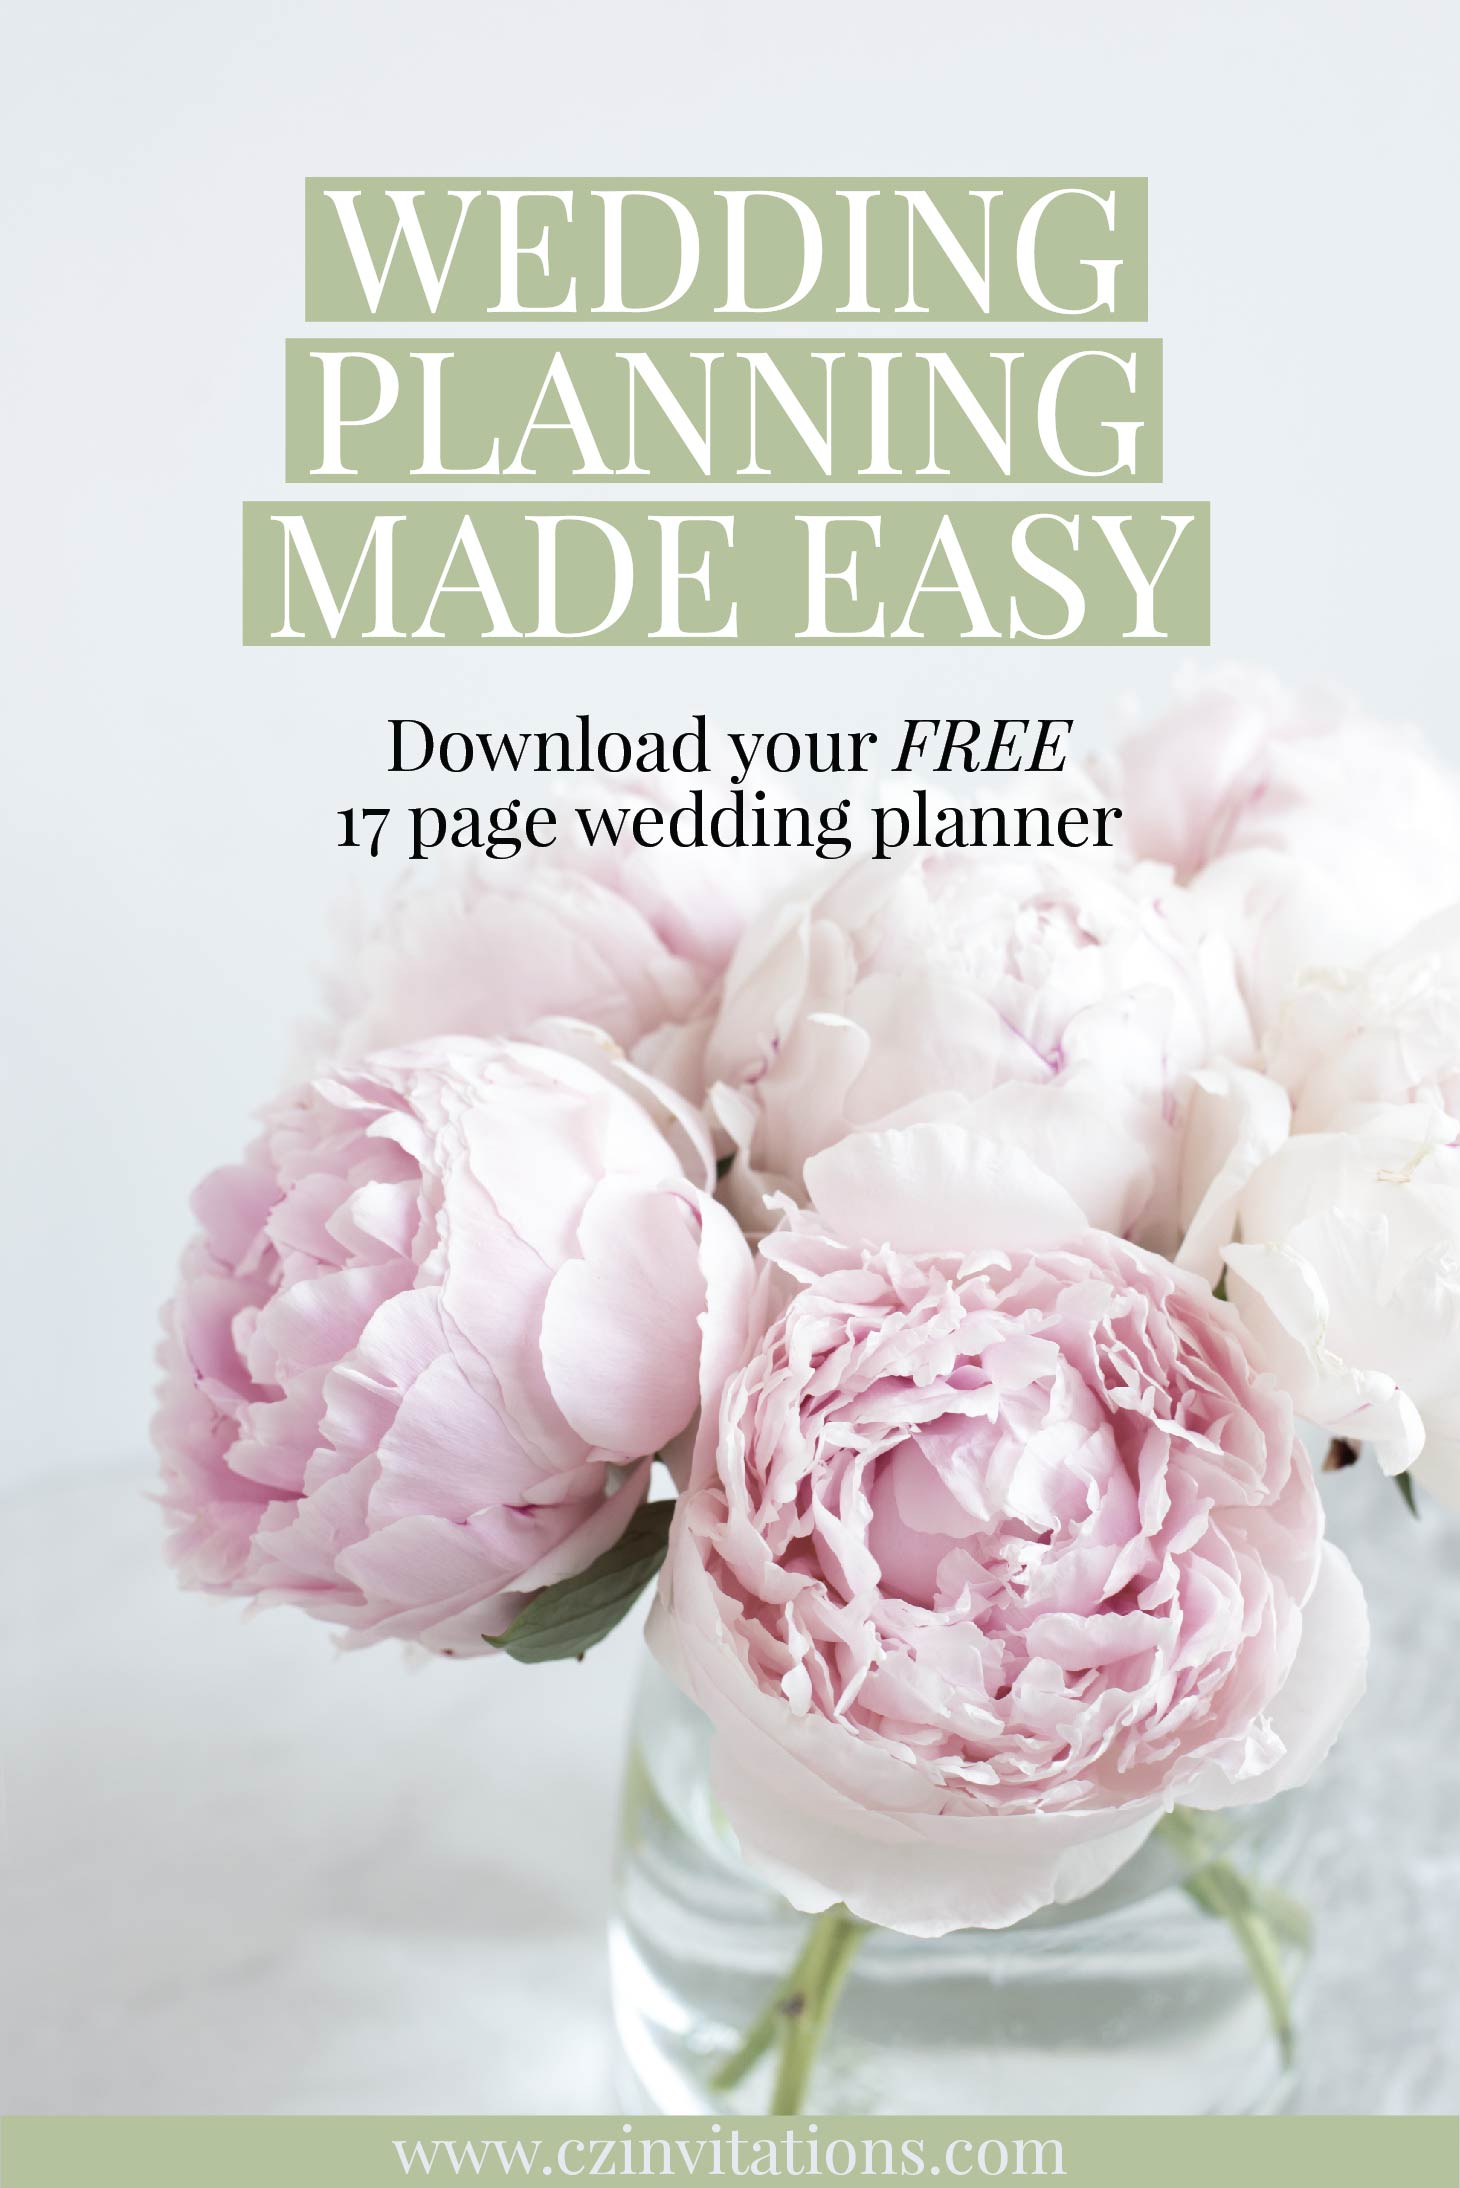 Wedding-planning-made-easy-01.jpg